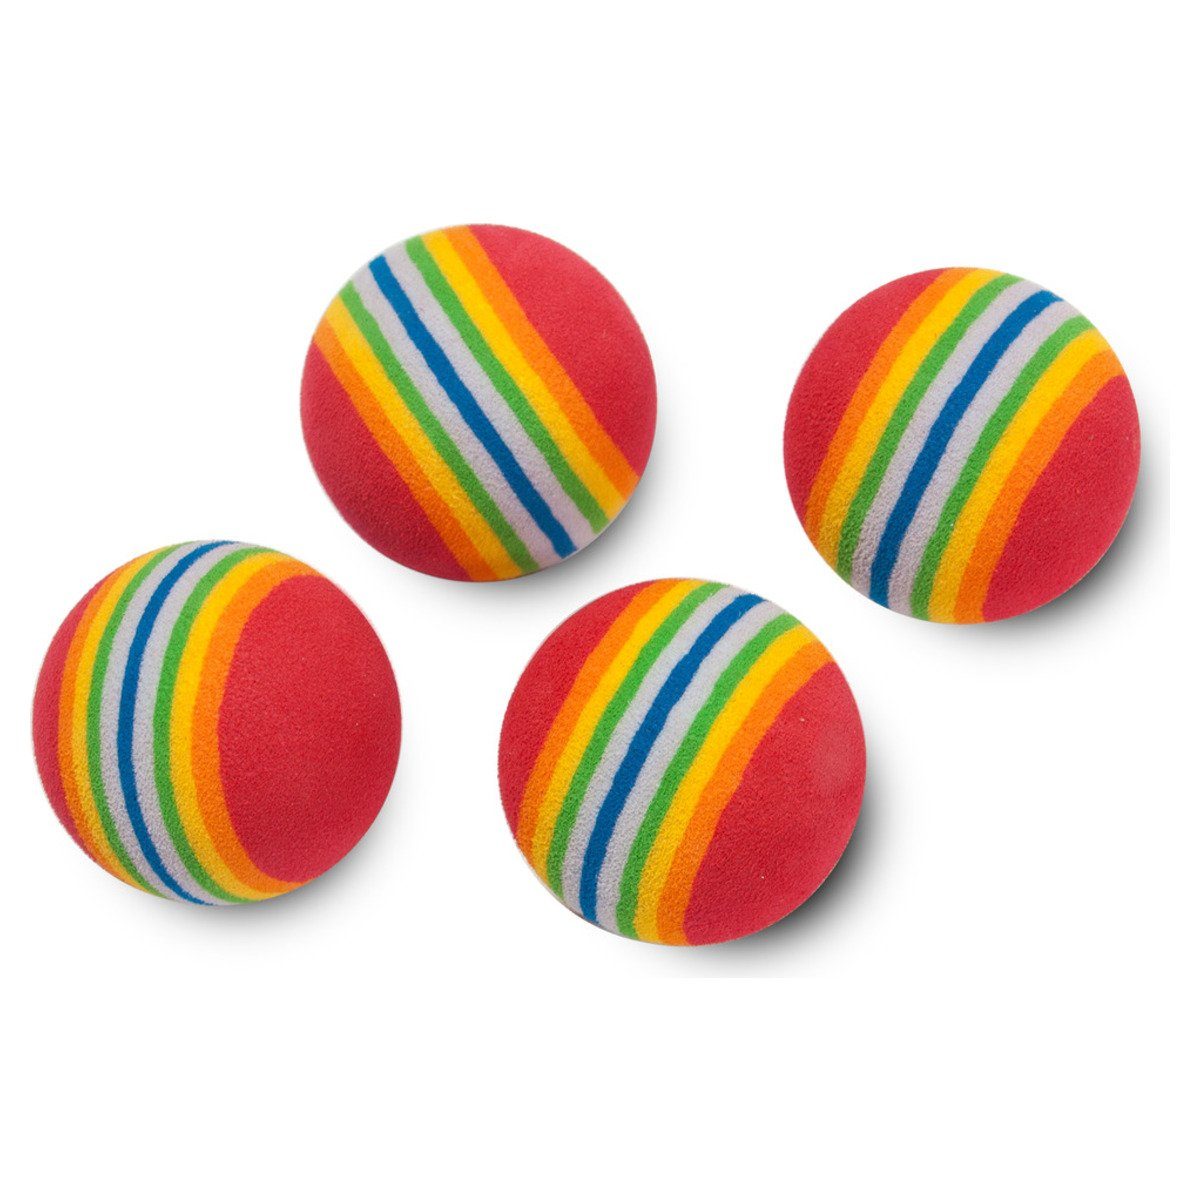 Karlie Tierball Rainbow Softbälle | Sportbälle